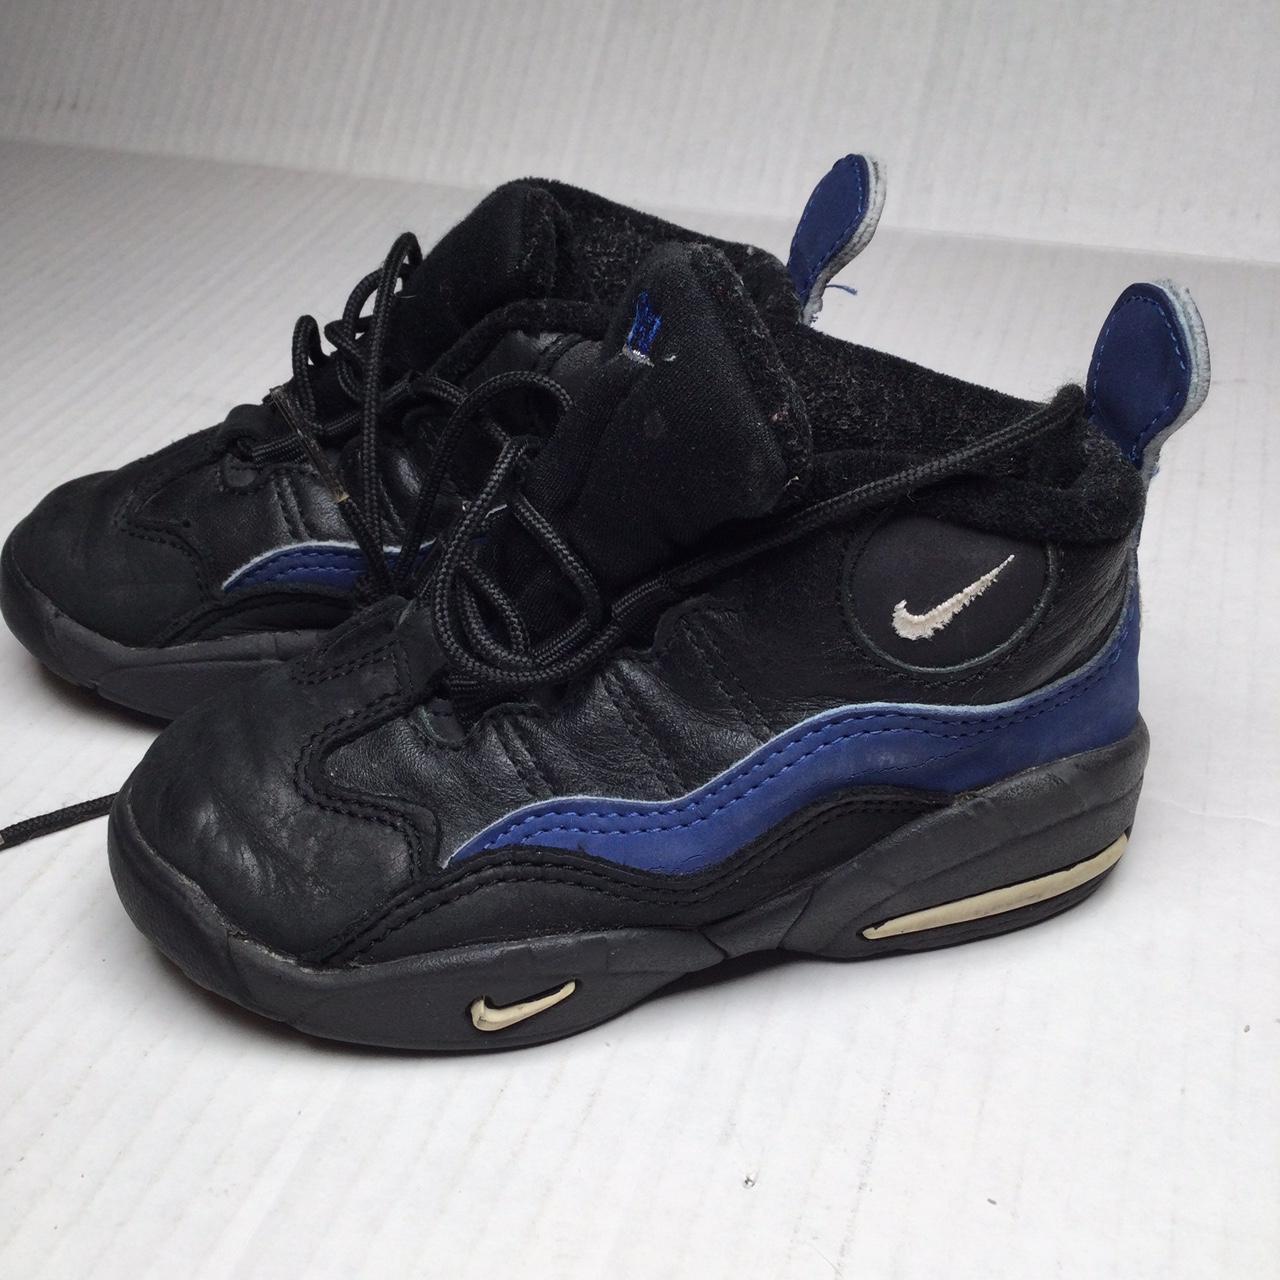 Vintage 1990s Chris Webber Nike Air Max basketball - Depop